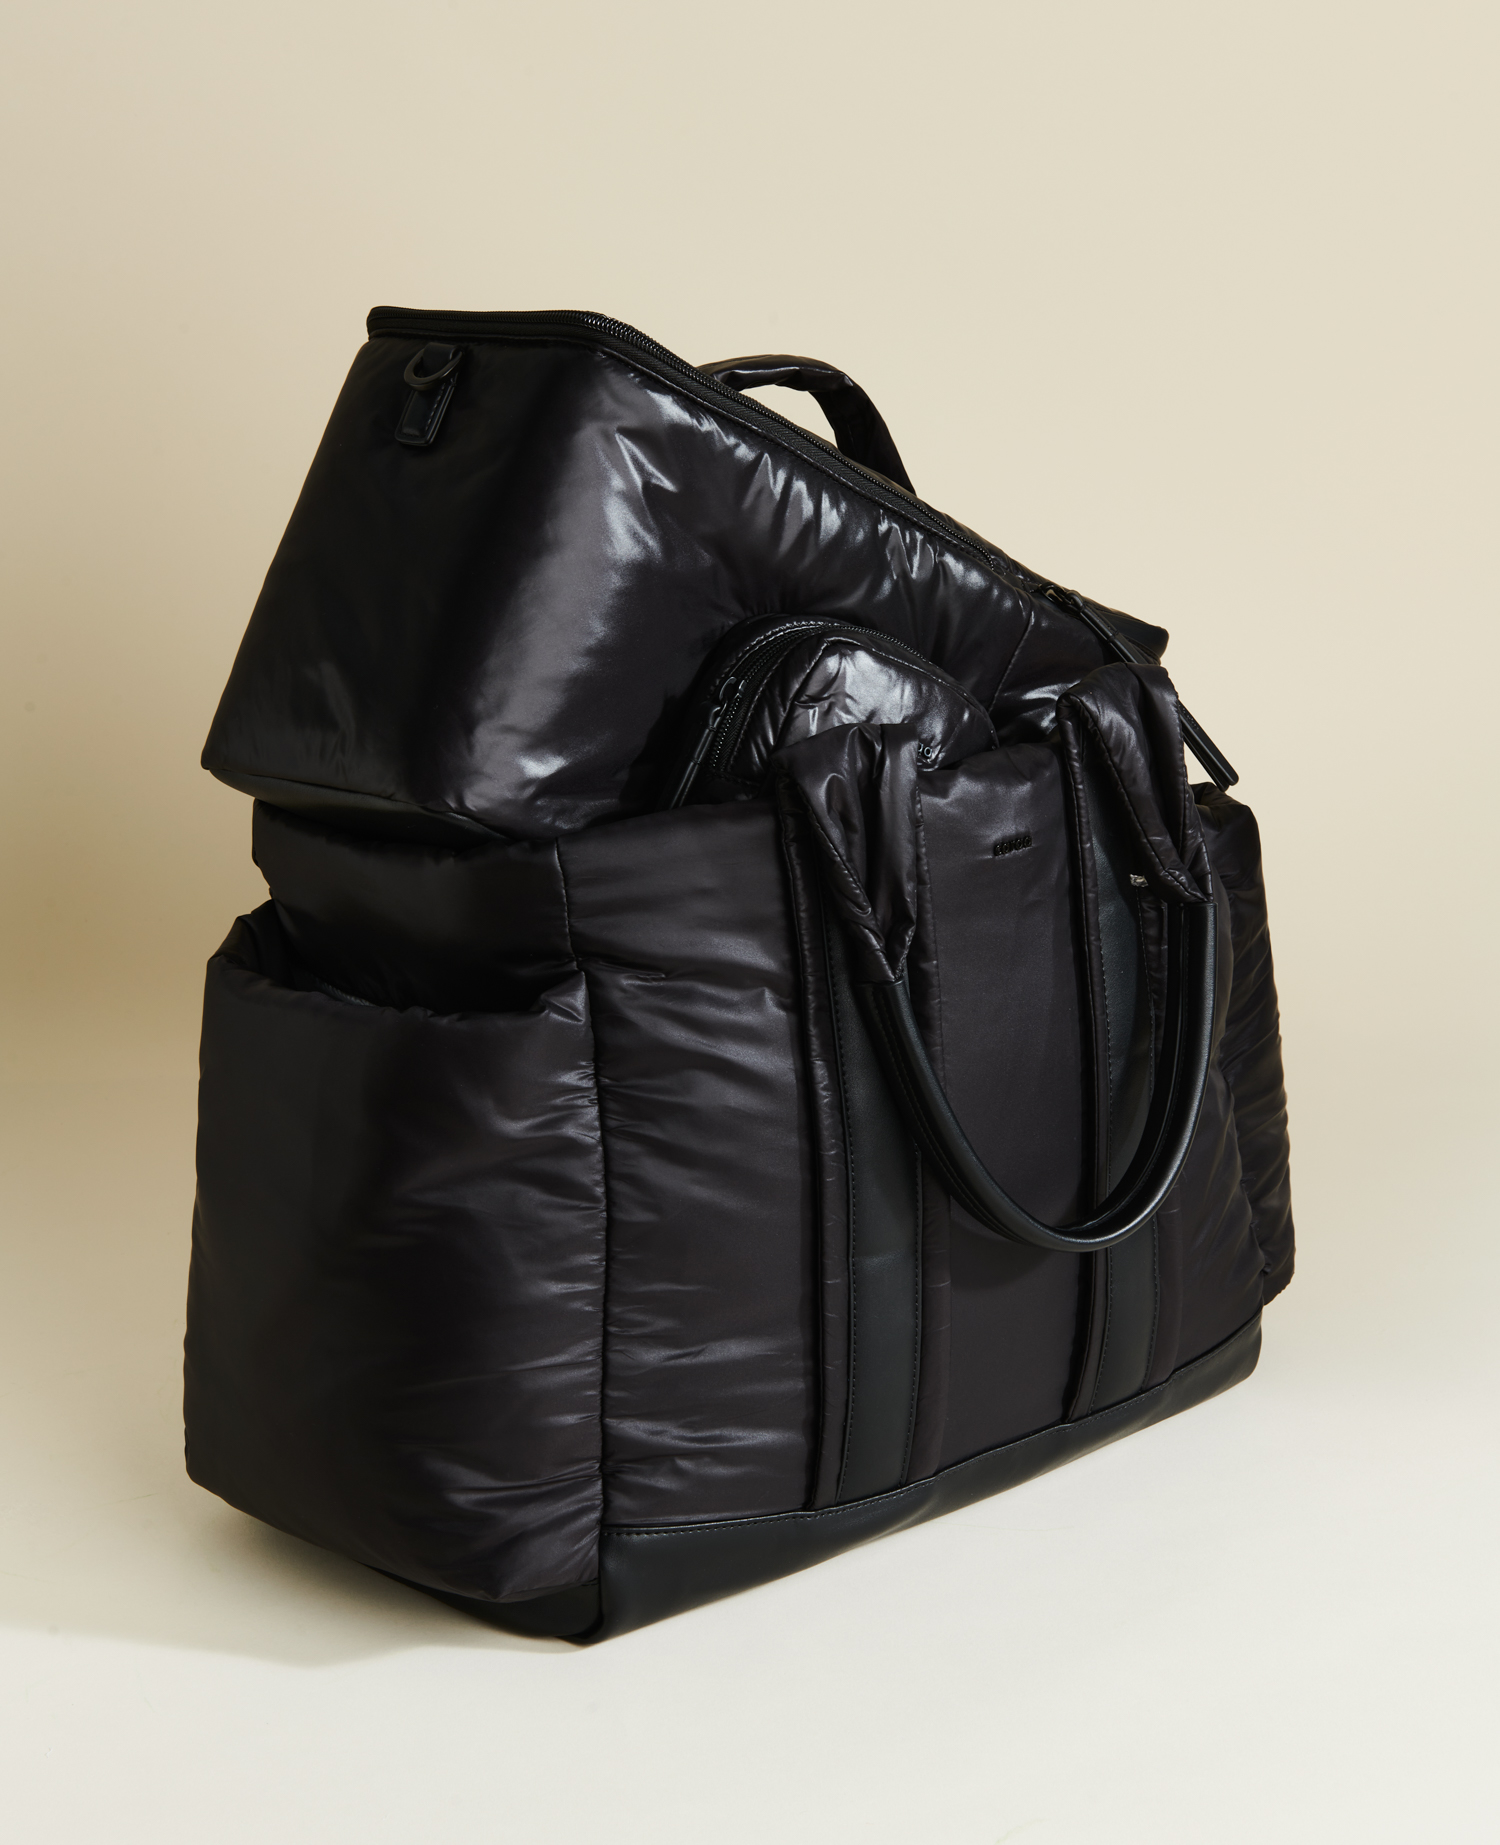 Caraa Baby Pump Bag Nylon in Black Recycled Water-Repellent Nylon